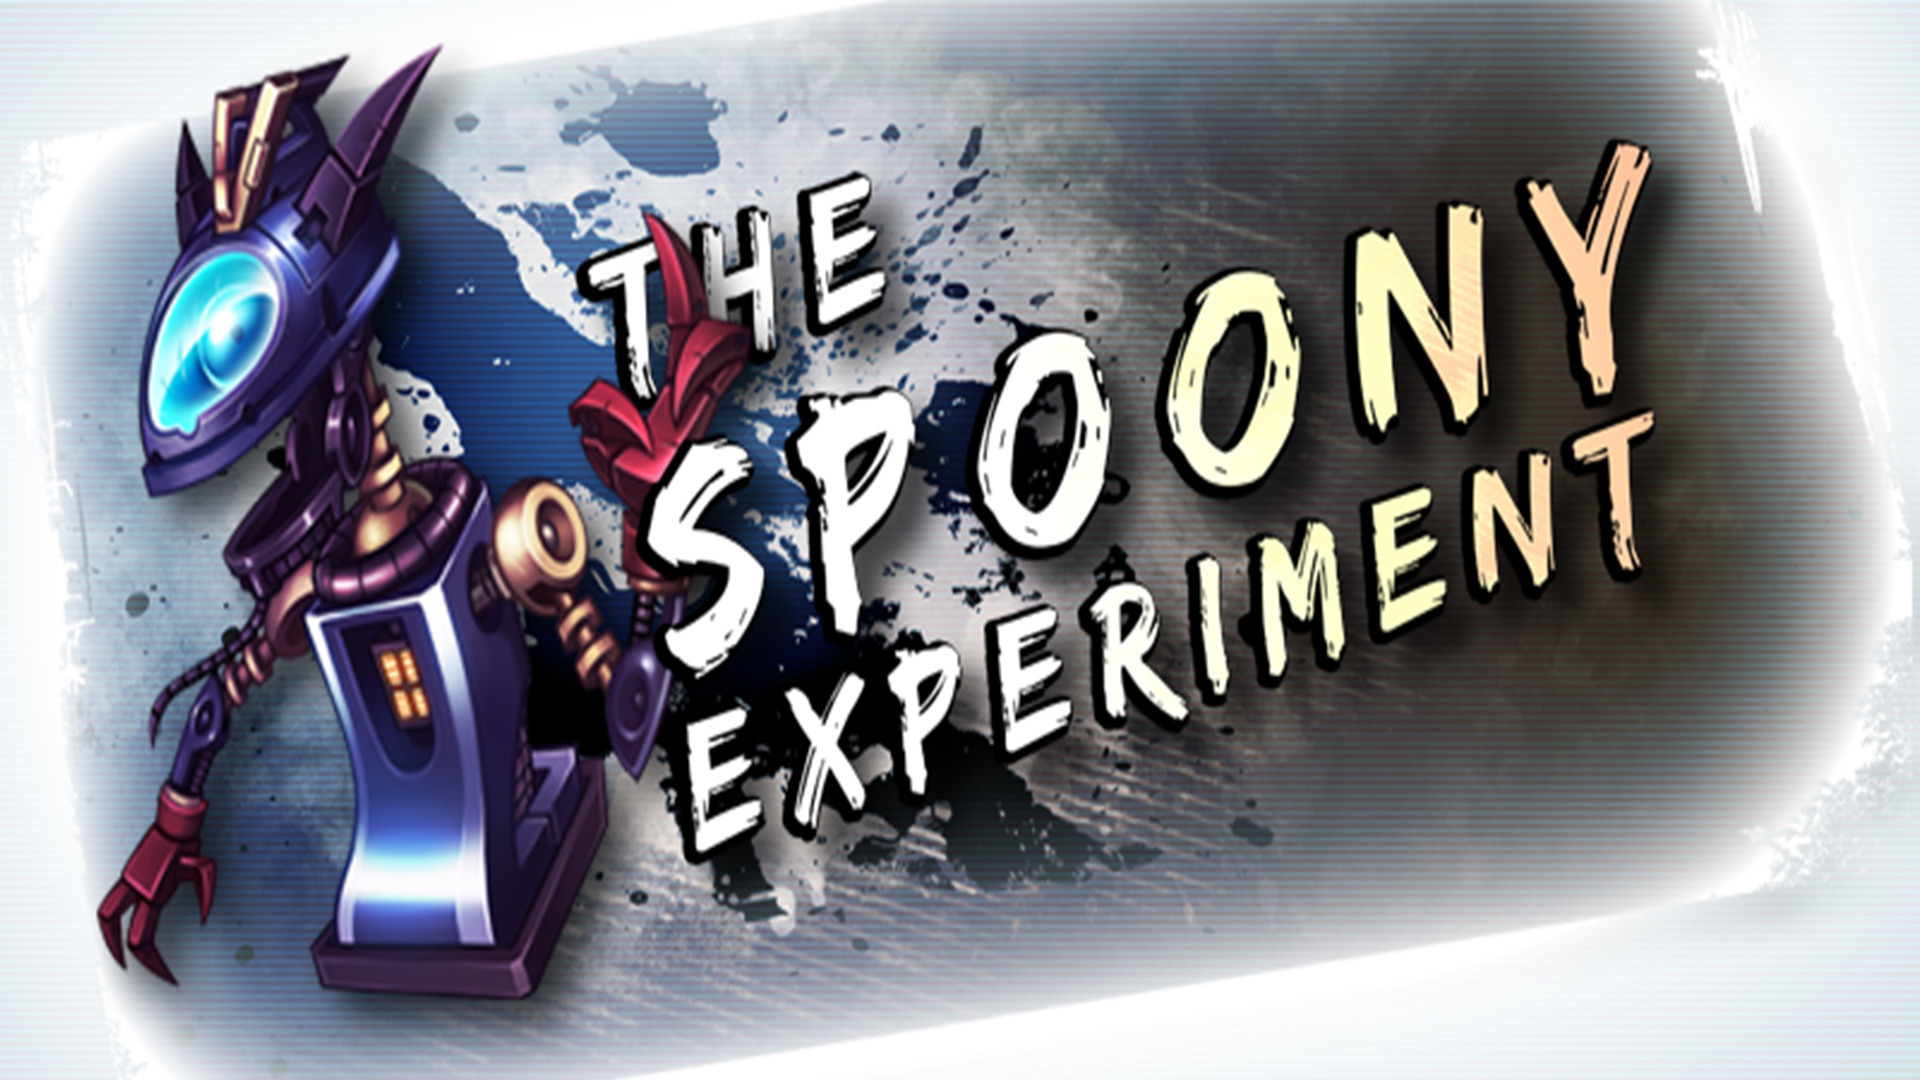 Show Spoony Experiment